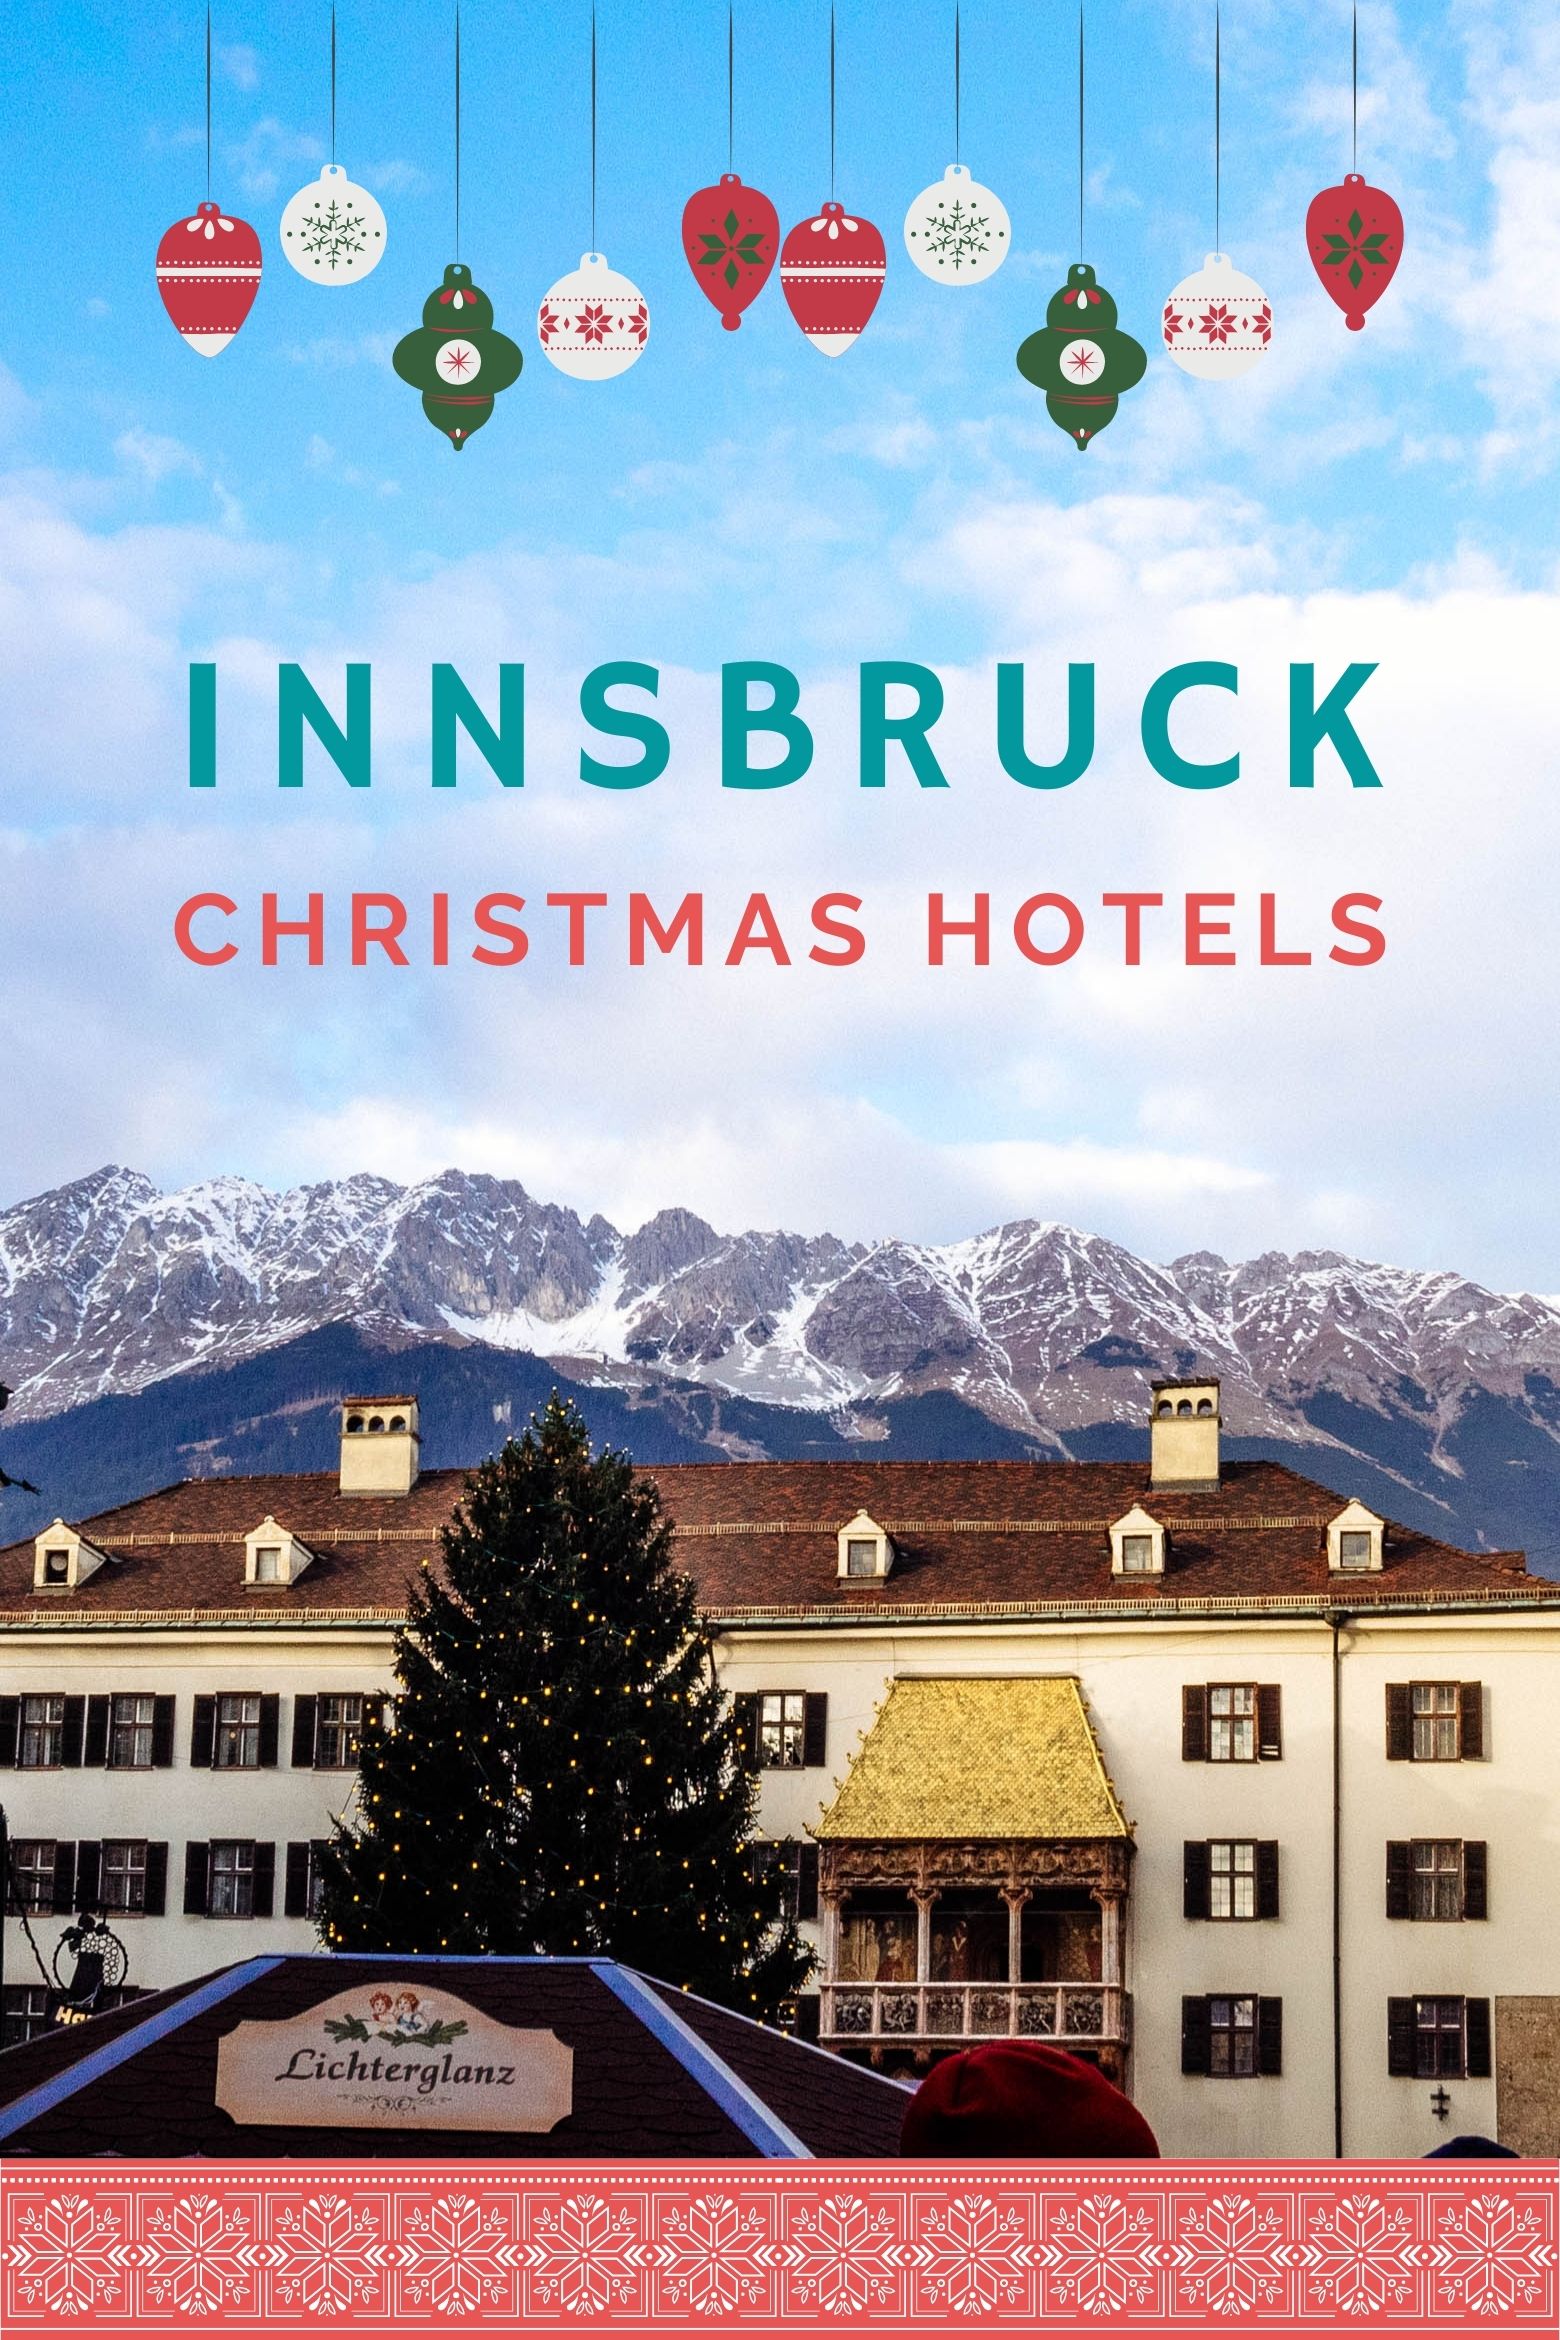 Golden Roof in Innsbruck behind the Christmas tree